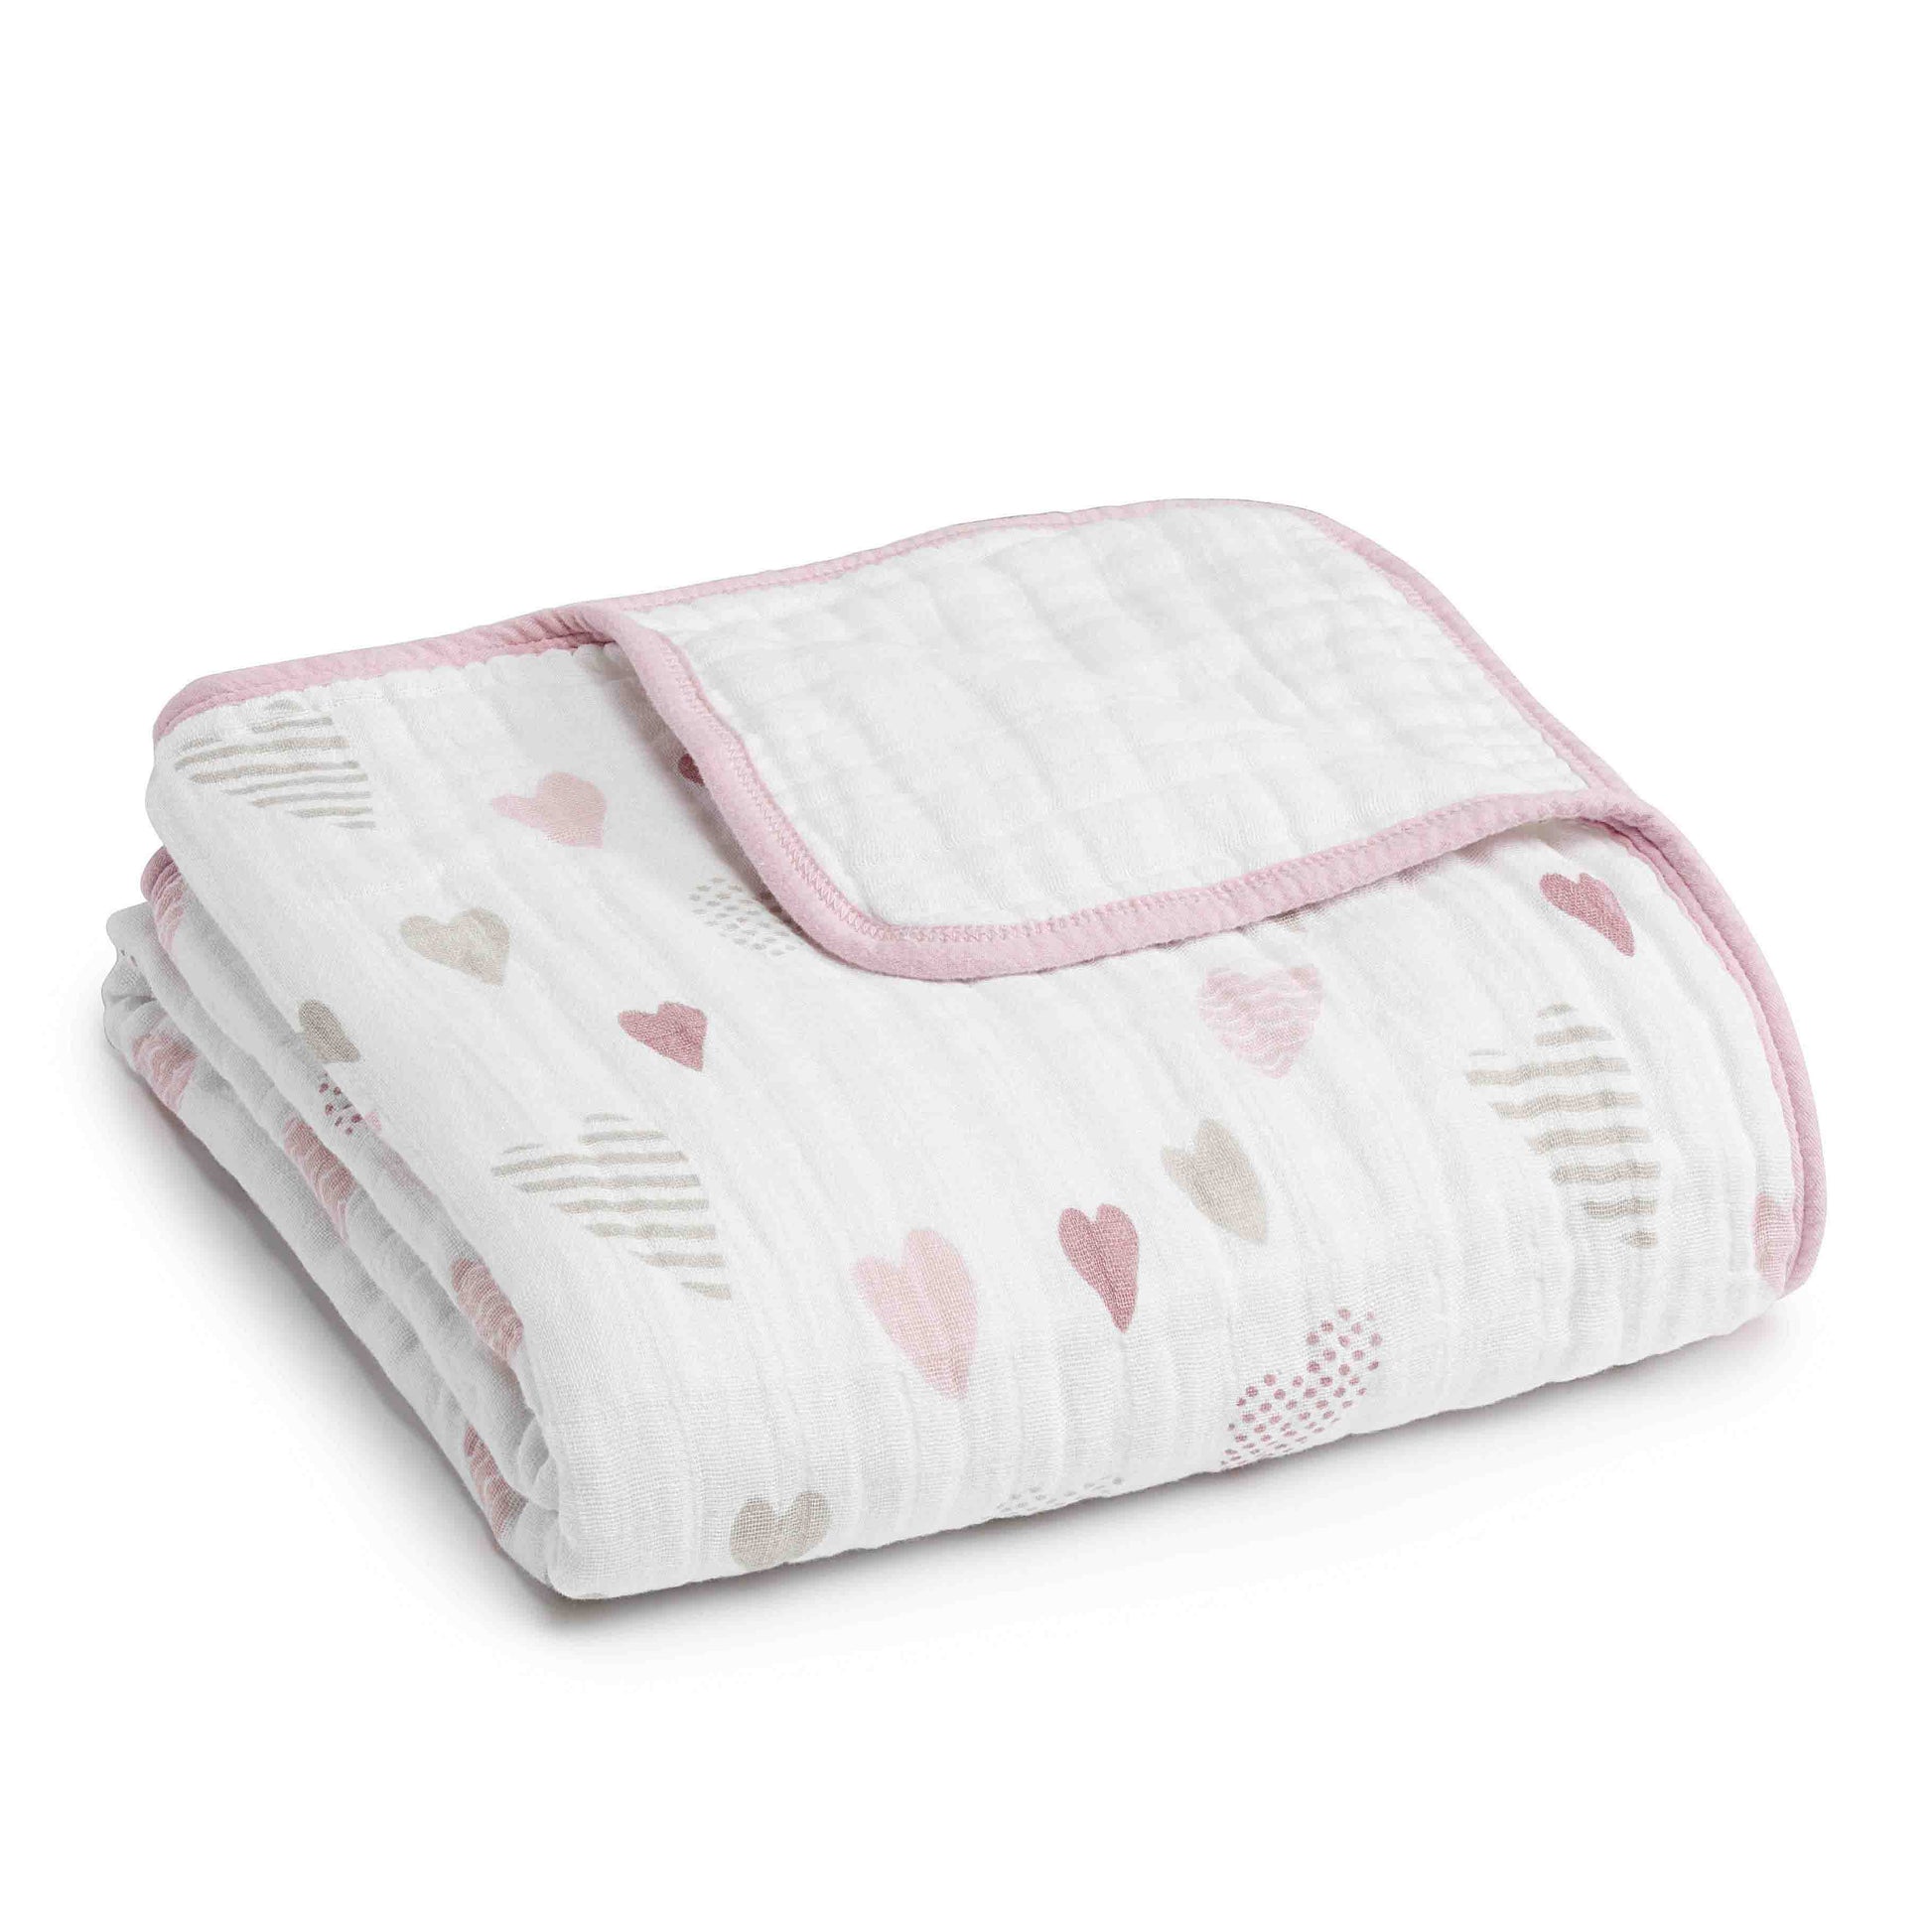 aden + anais Kids accessories Heart Breaker Classic Dream Blanket - Ever Simplicity